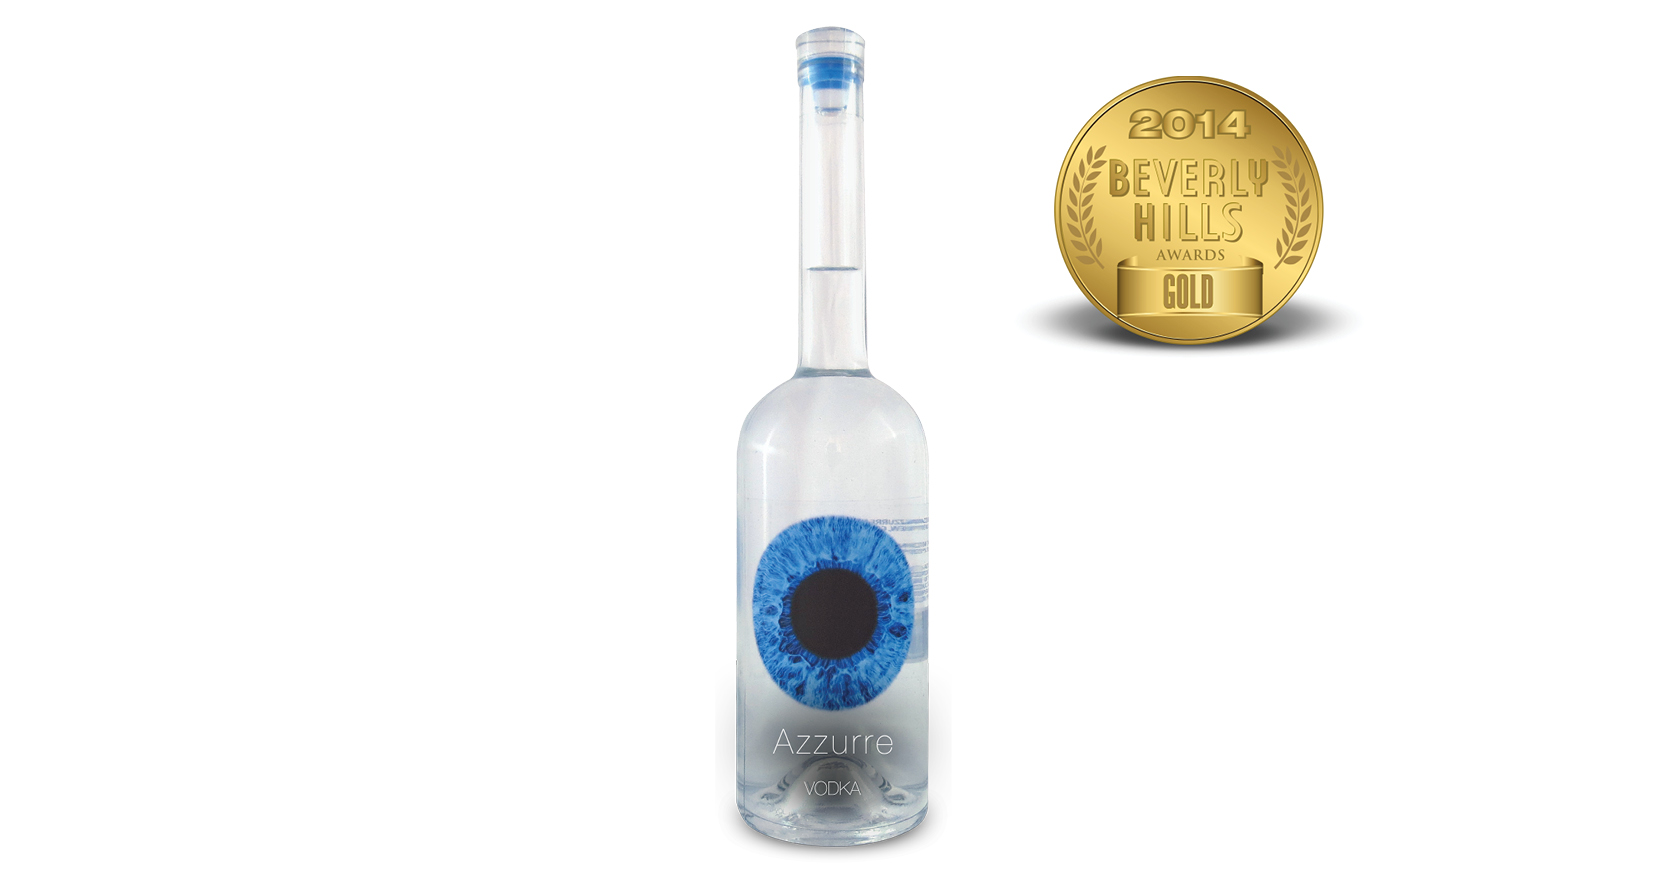 Azzurre Vodka